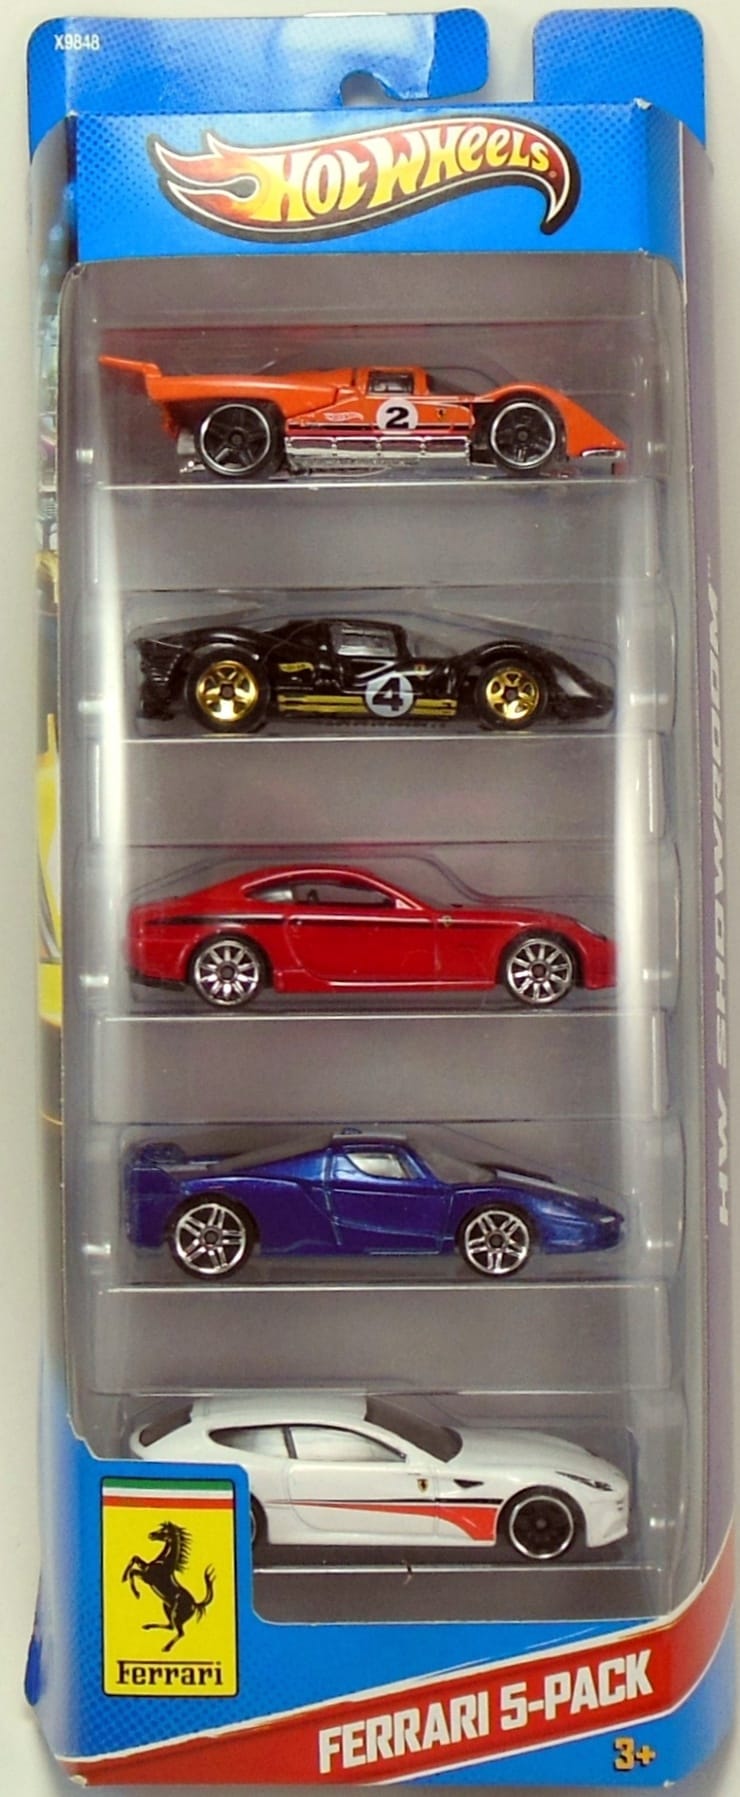 Hot Wheels Ferrari 5 Pack